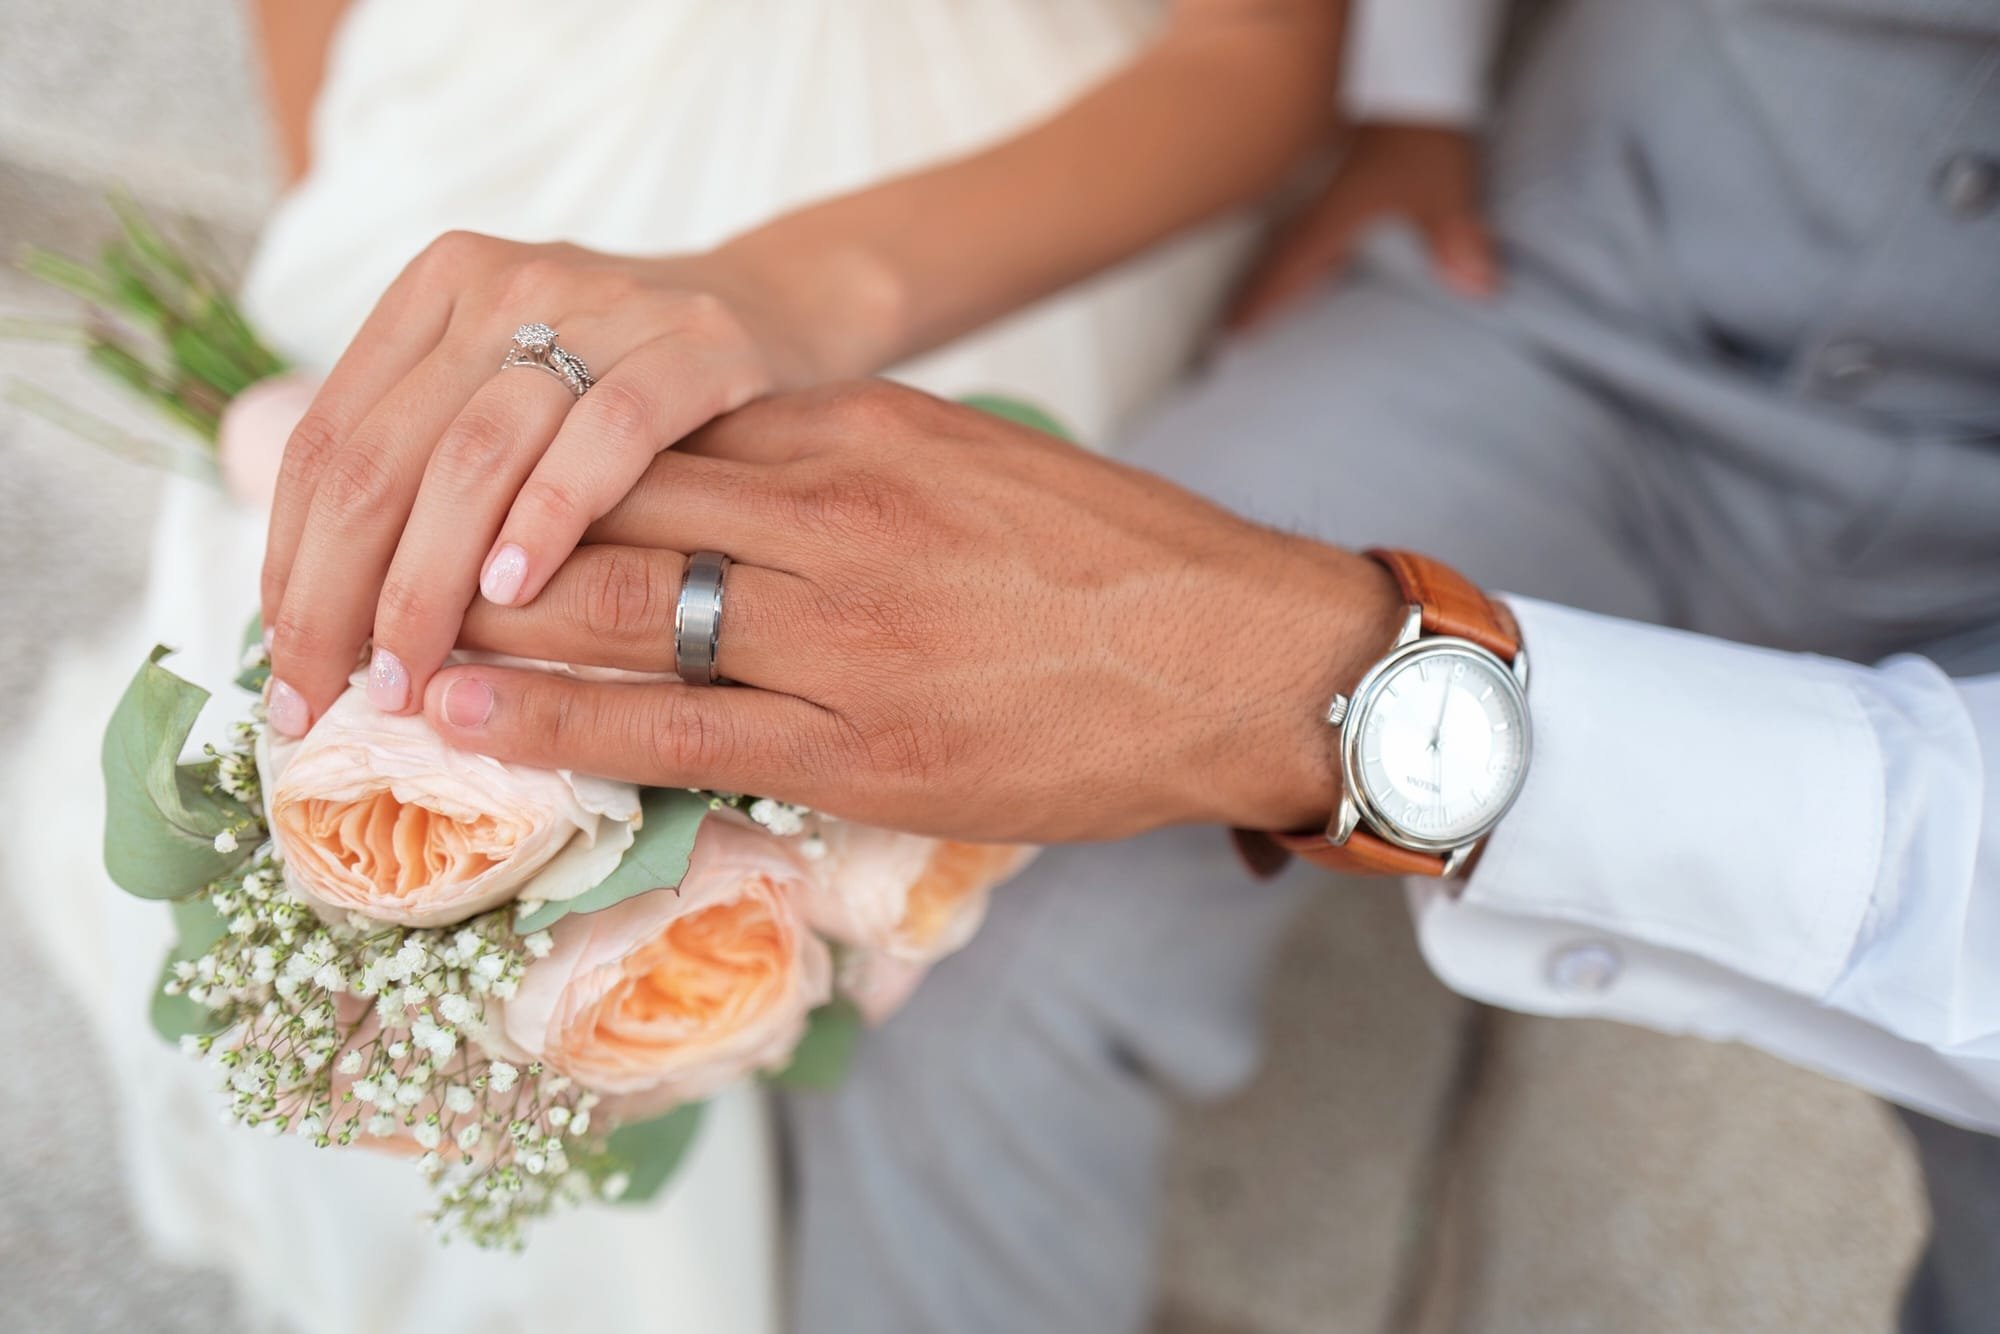 Ao casar, preciso mudar meu sobrenome?